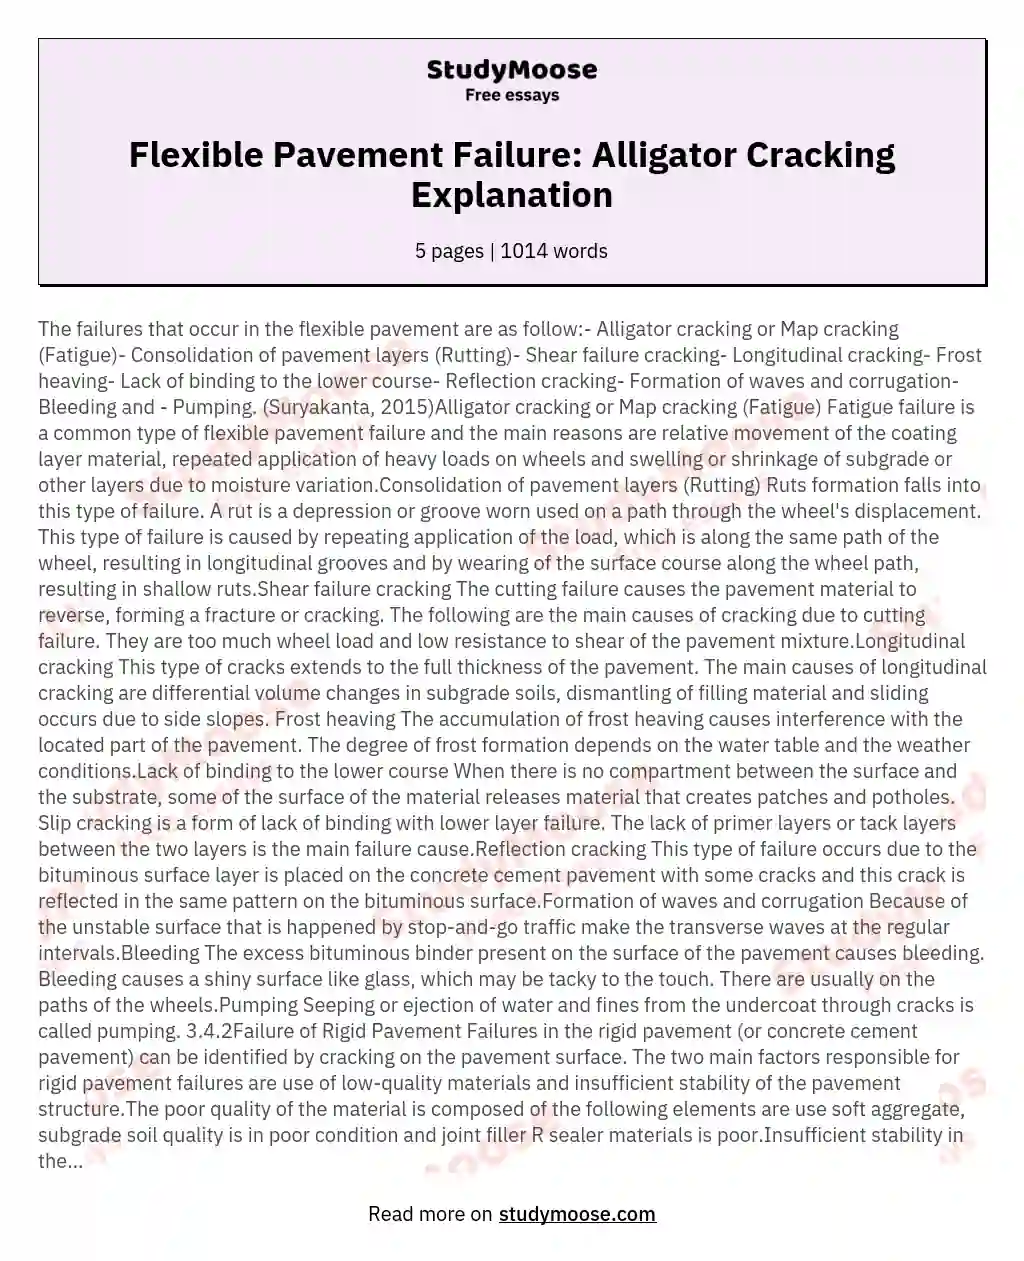 Flexible Pavement Failure: Alligator Cracking Explanation essay